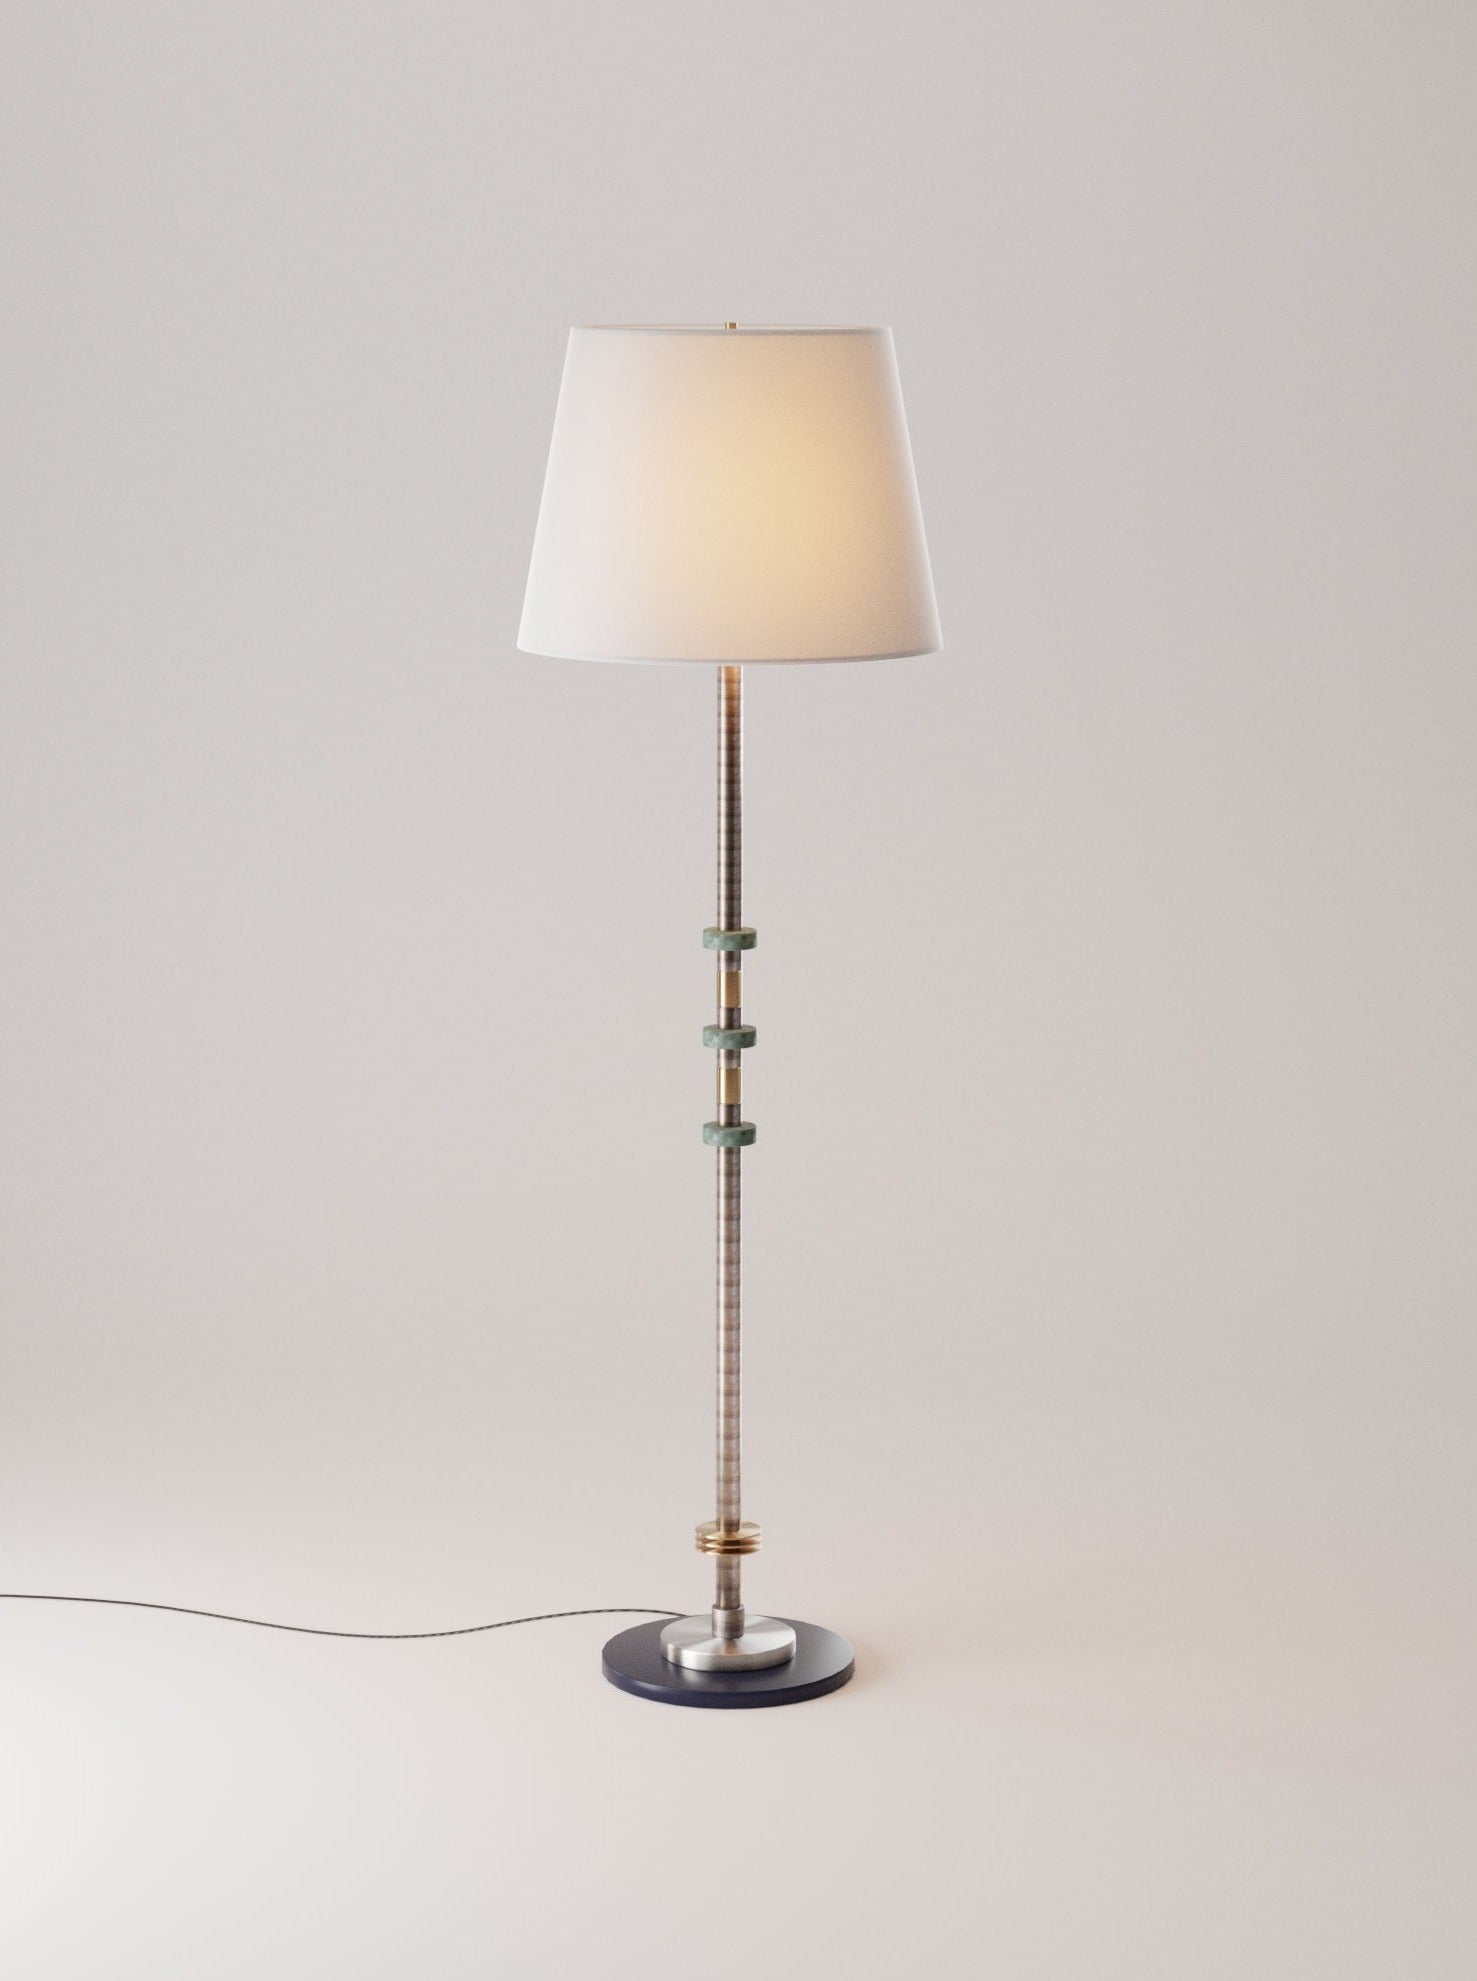 Modern Alte Floor Lamp with adjustable arm and sleek black shade